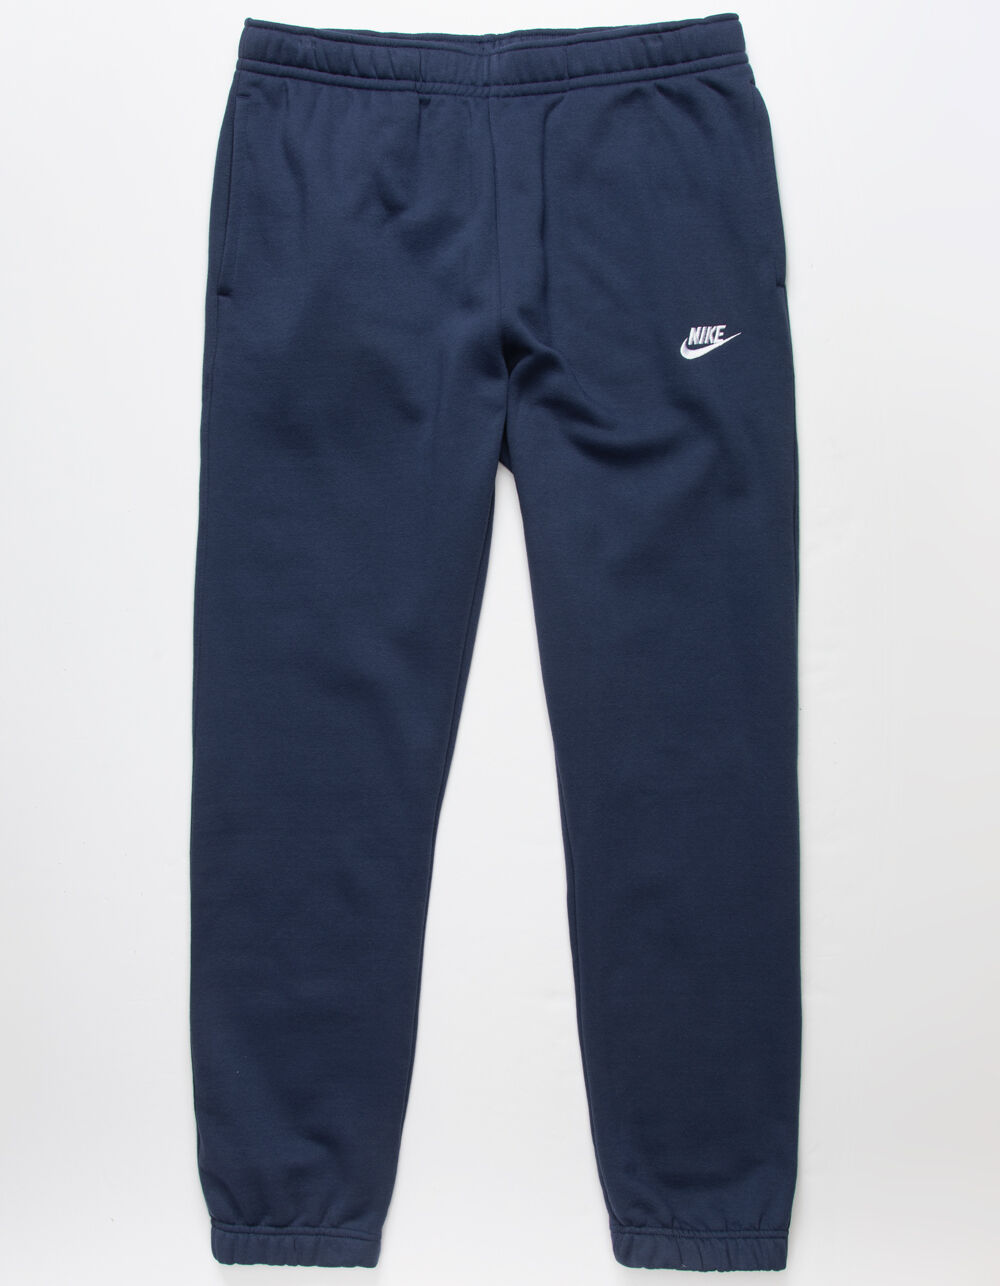 Nike Mens Navy Blue Loose Sweatpants Athletic Pants - Medium